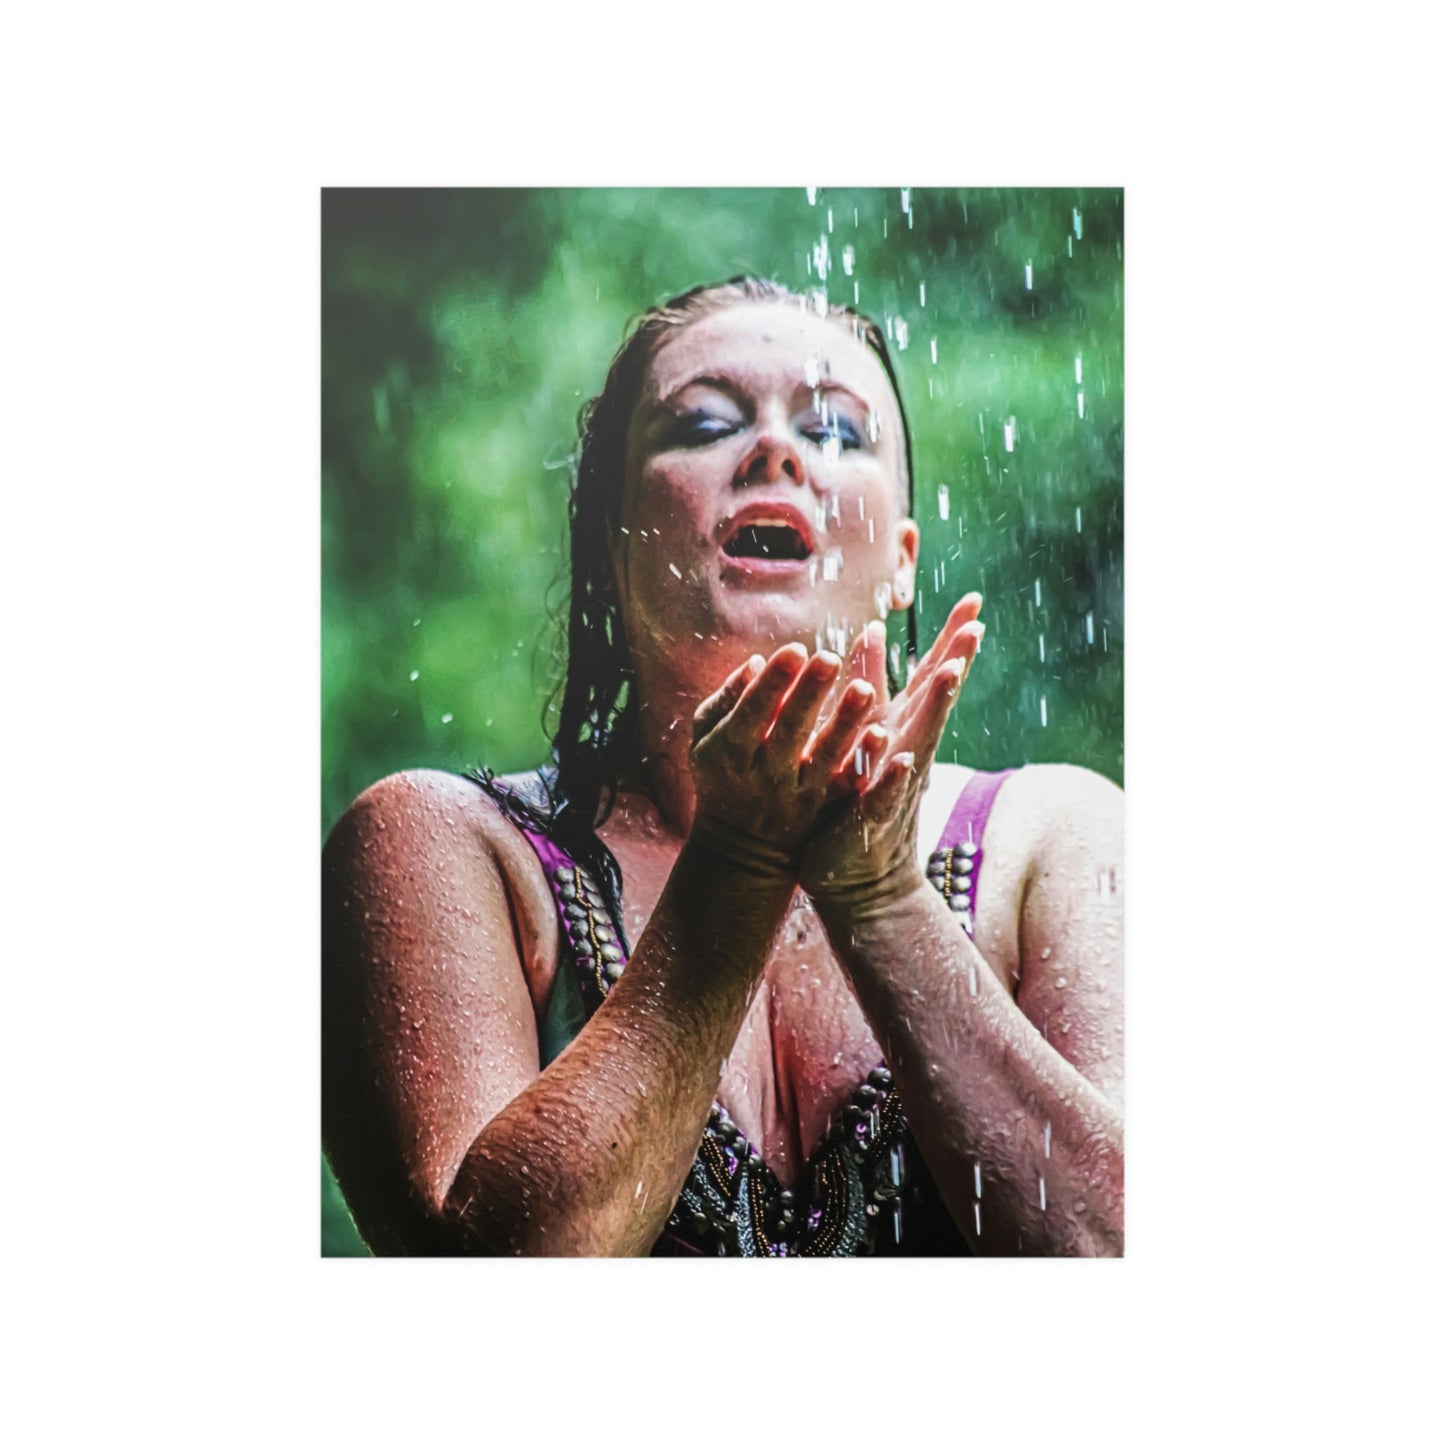 "Rain" poster